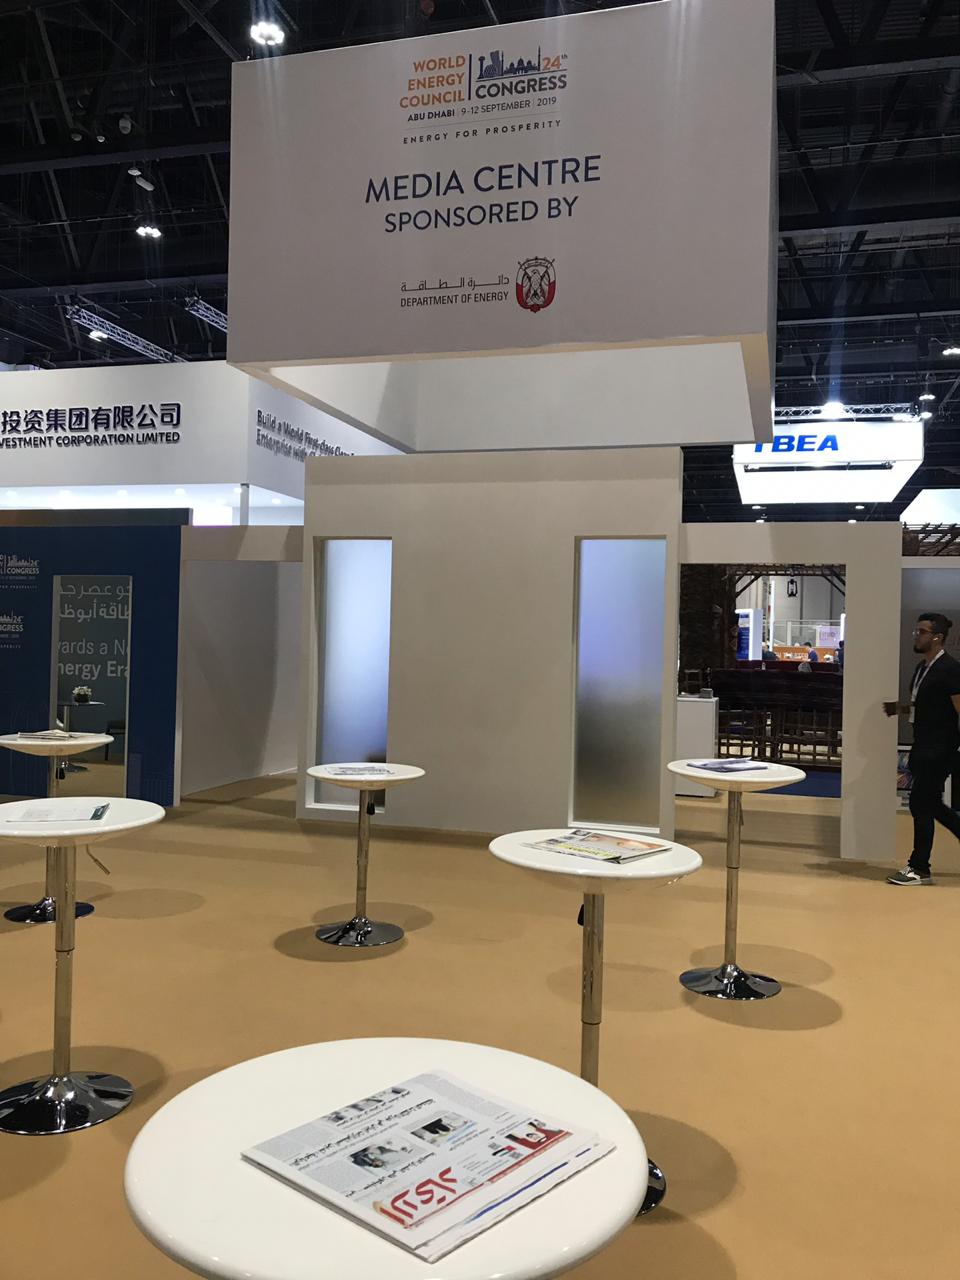 The 24th World Energy Congress - Abu Dhabi 2019